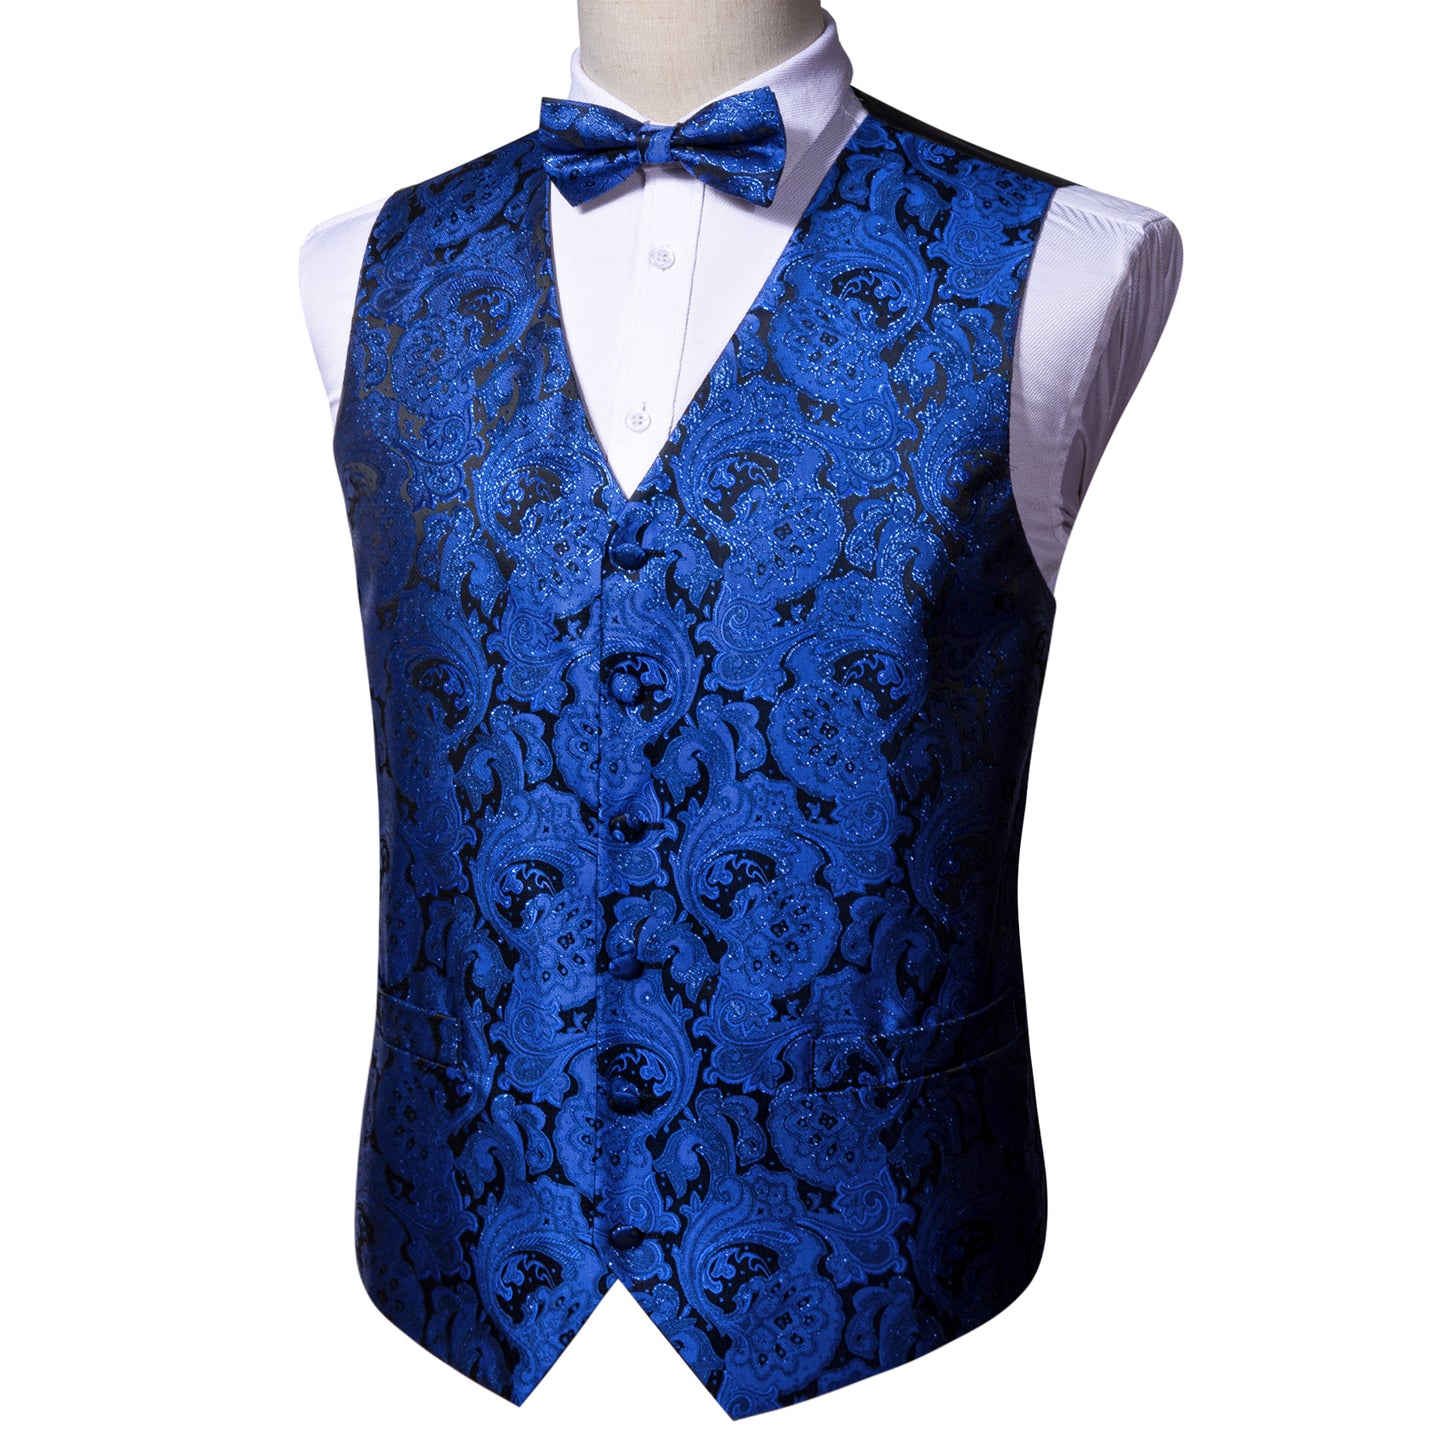 Designer Waistcoat Novelty Bowtie Vest Shiny French Fan Print Royal Blue